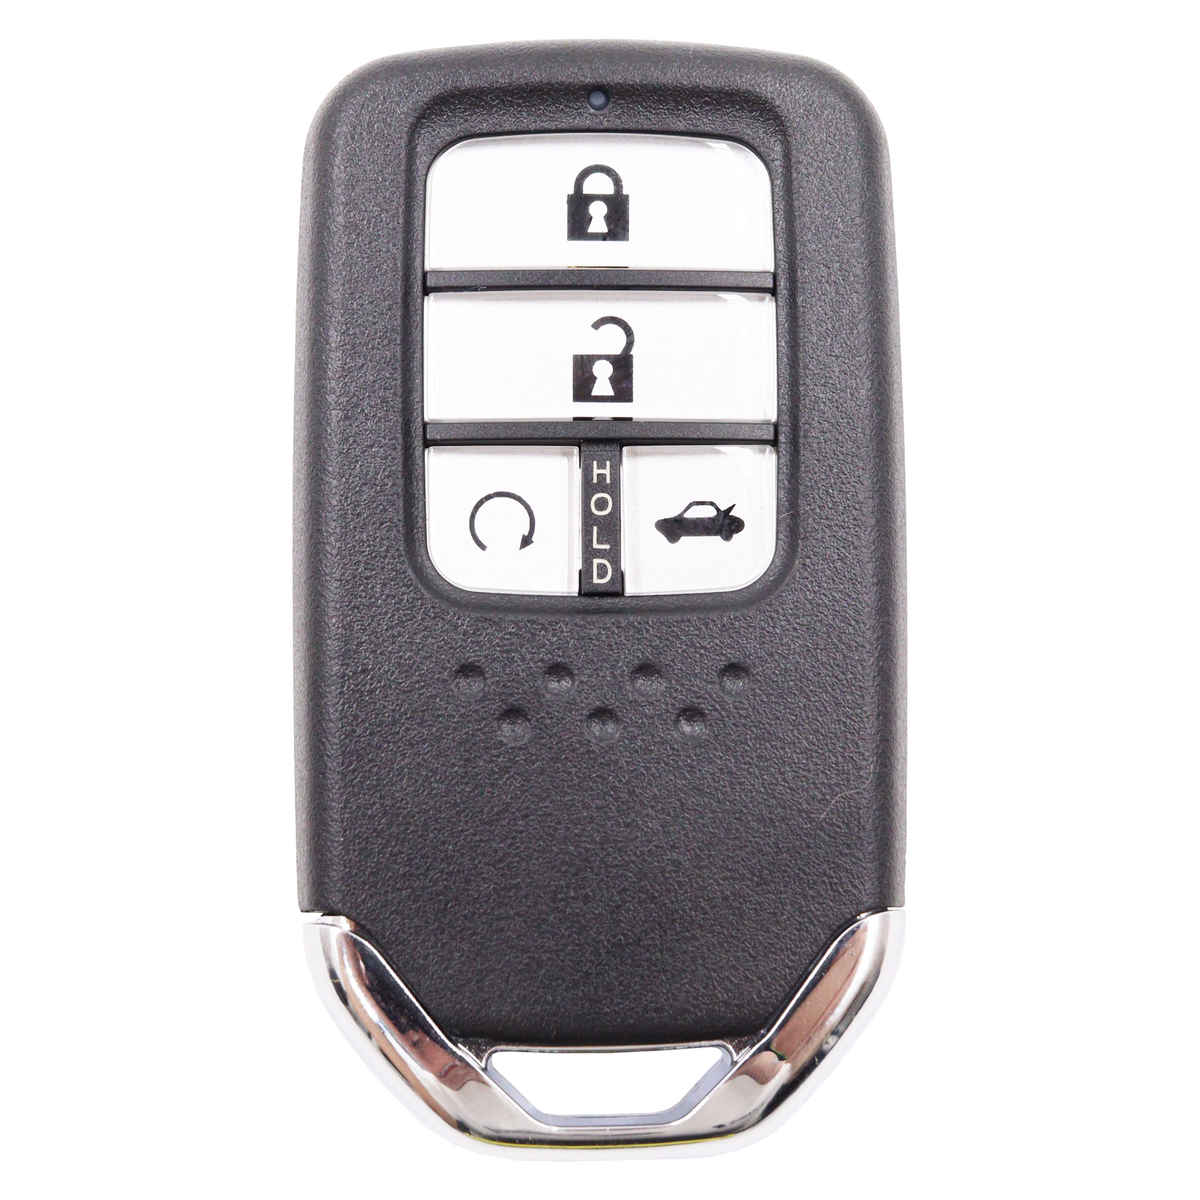 Honda compatible 4 button Hon66 remote prox key housing